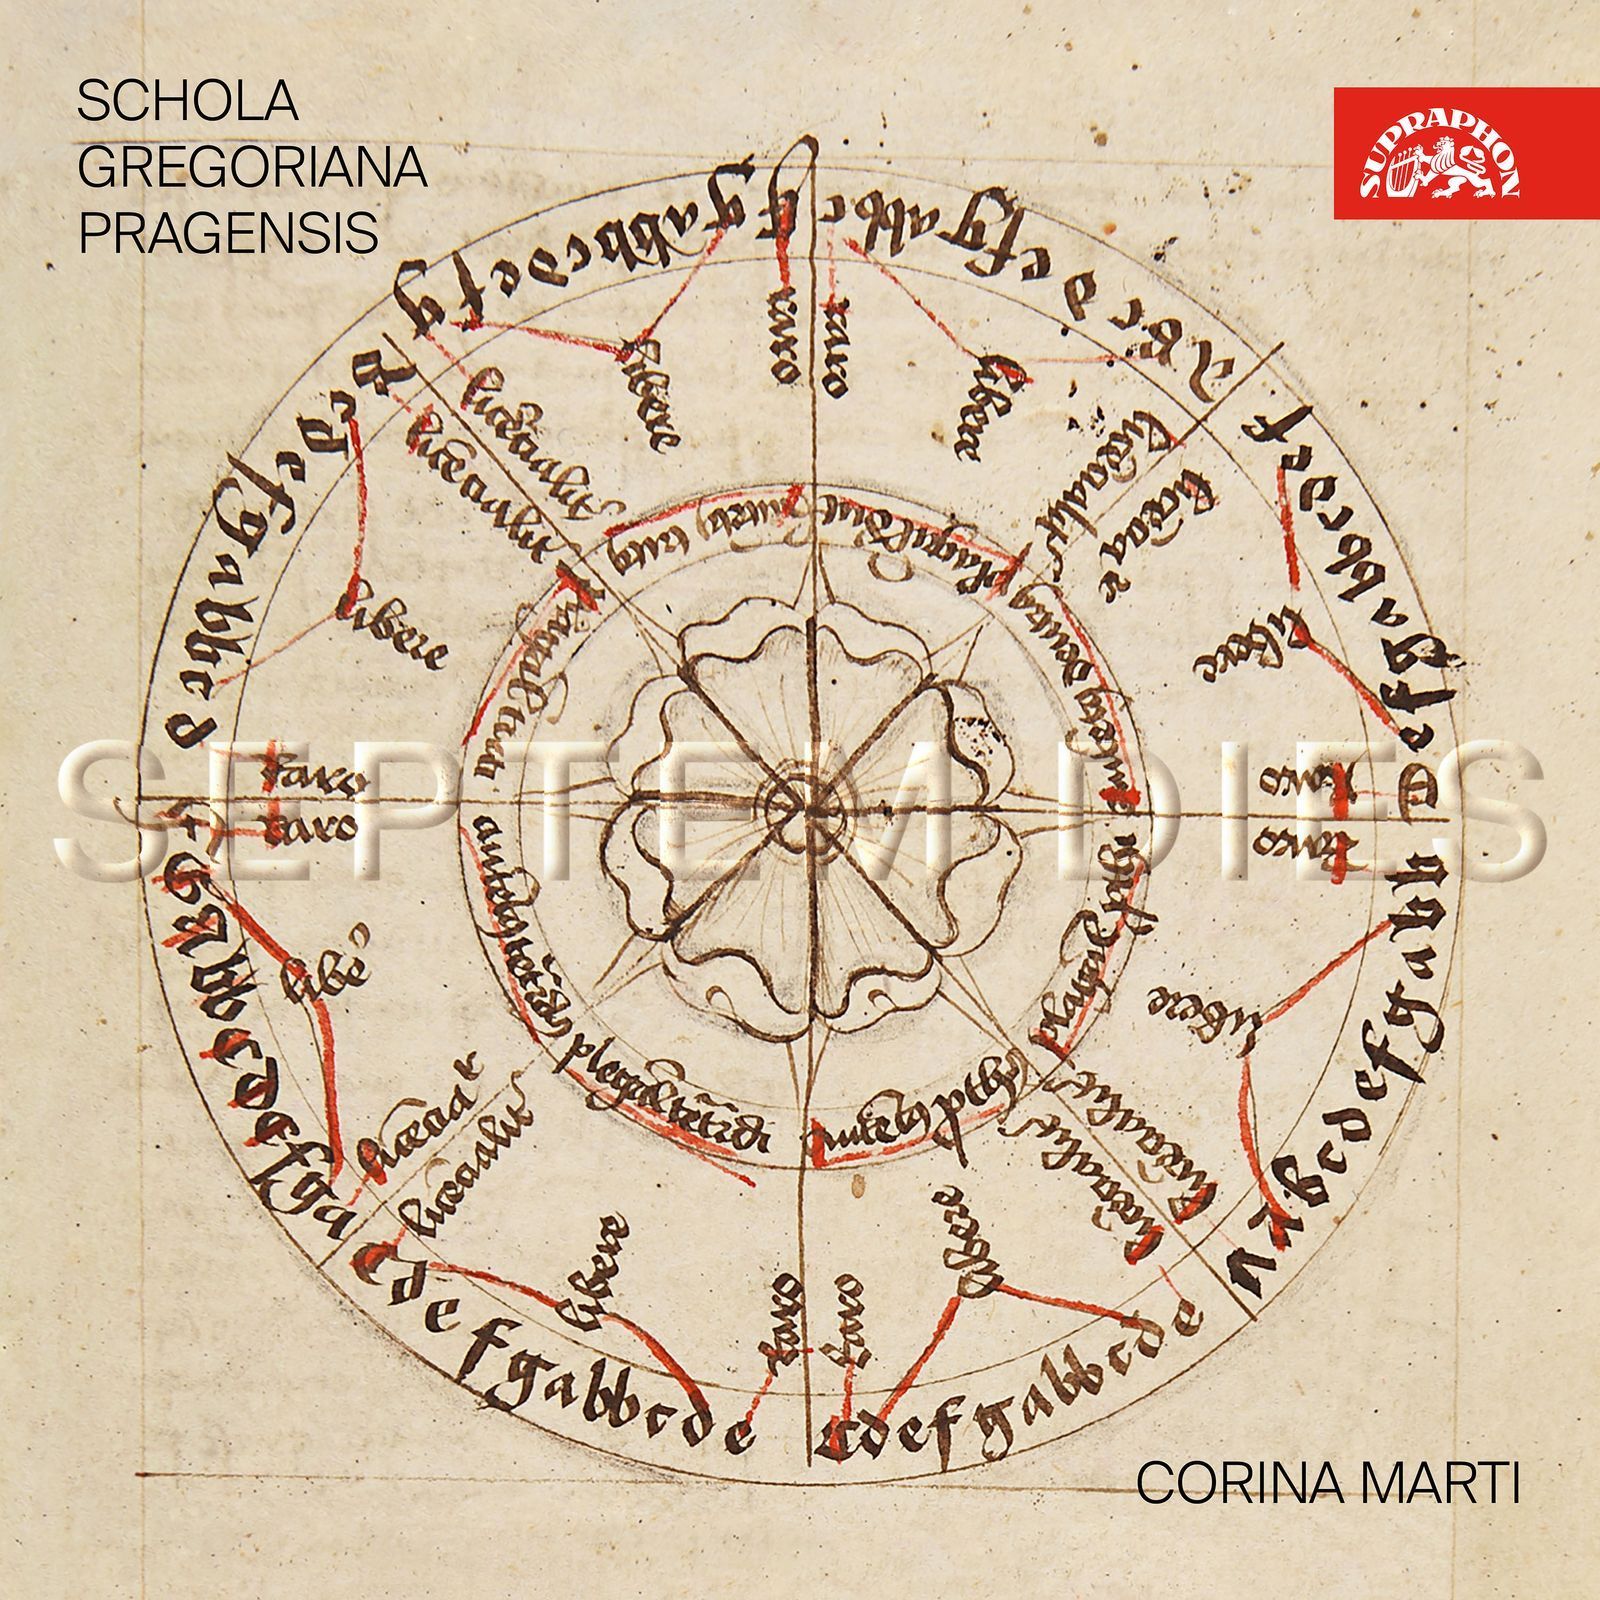 Schola Gregoriana Pragensis: Septem dies